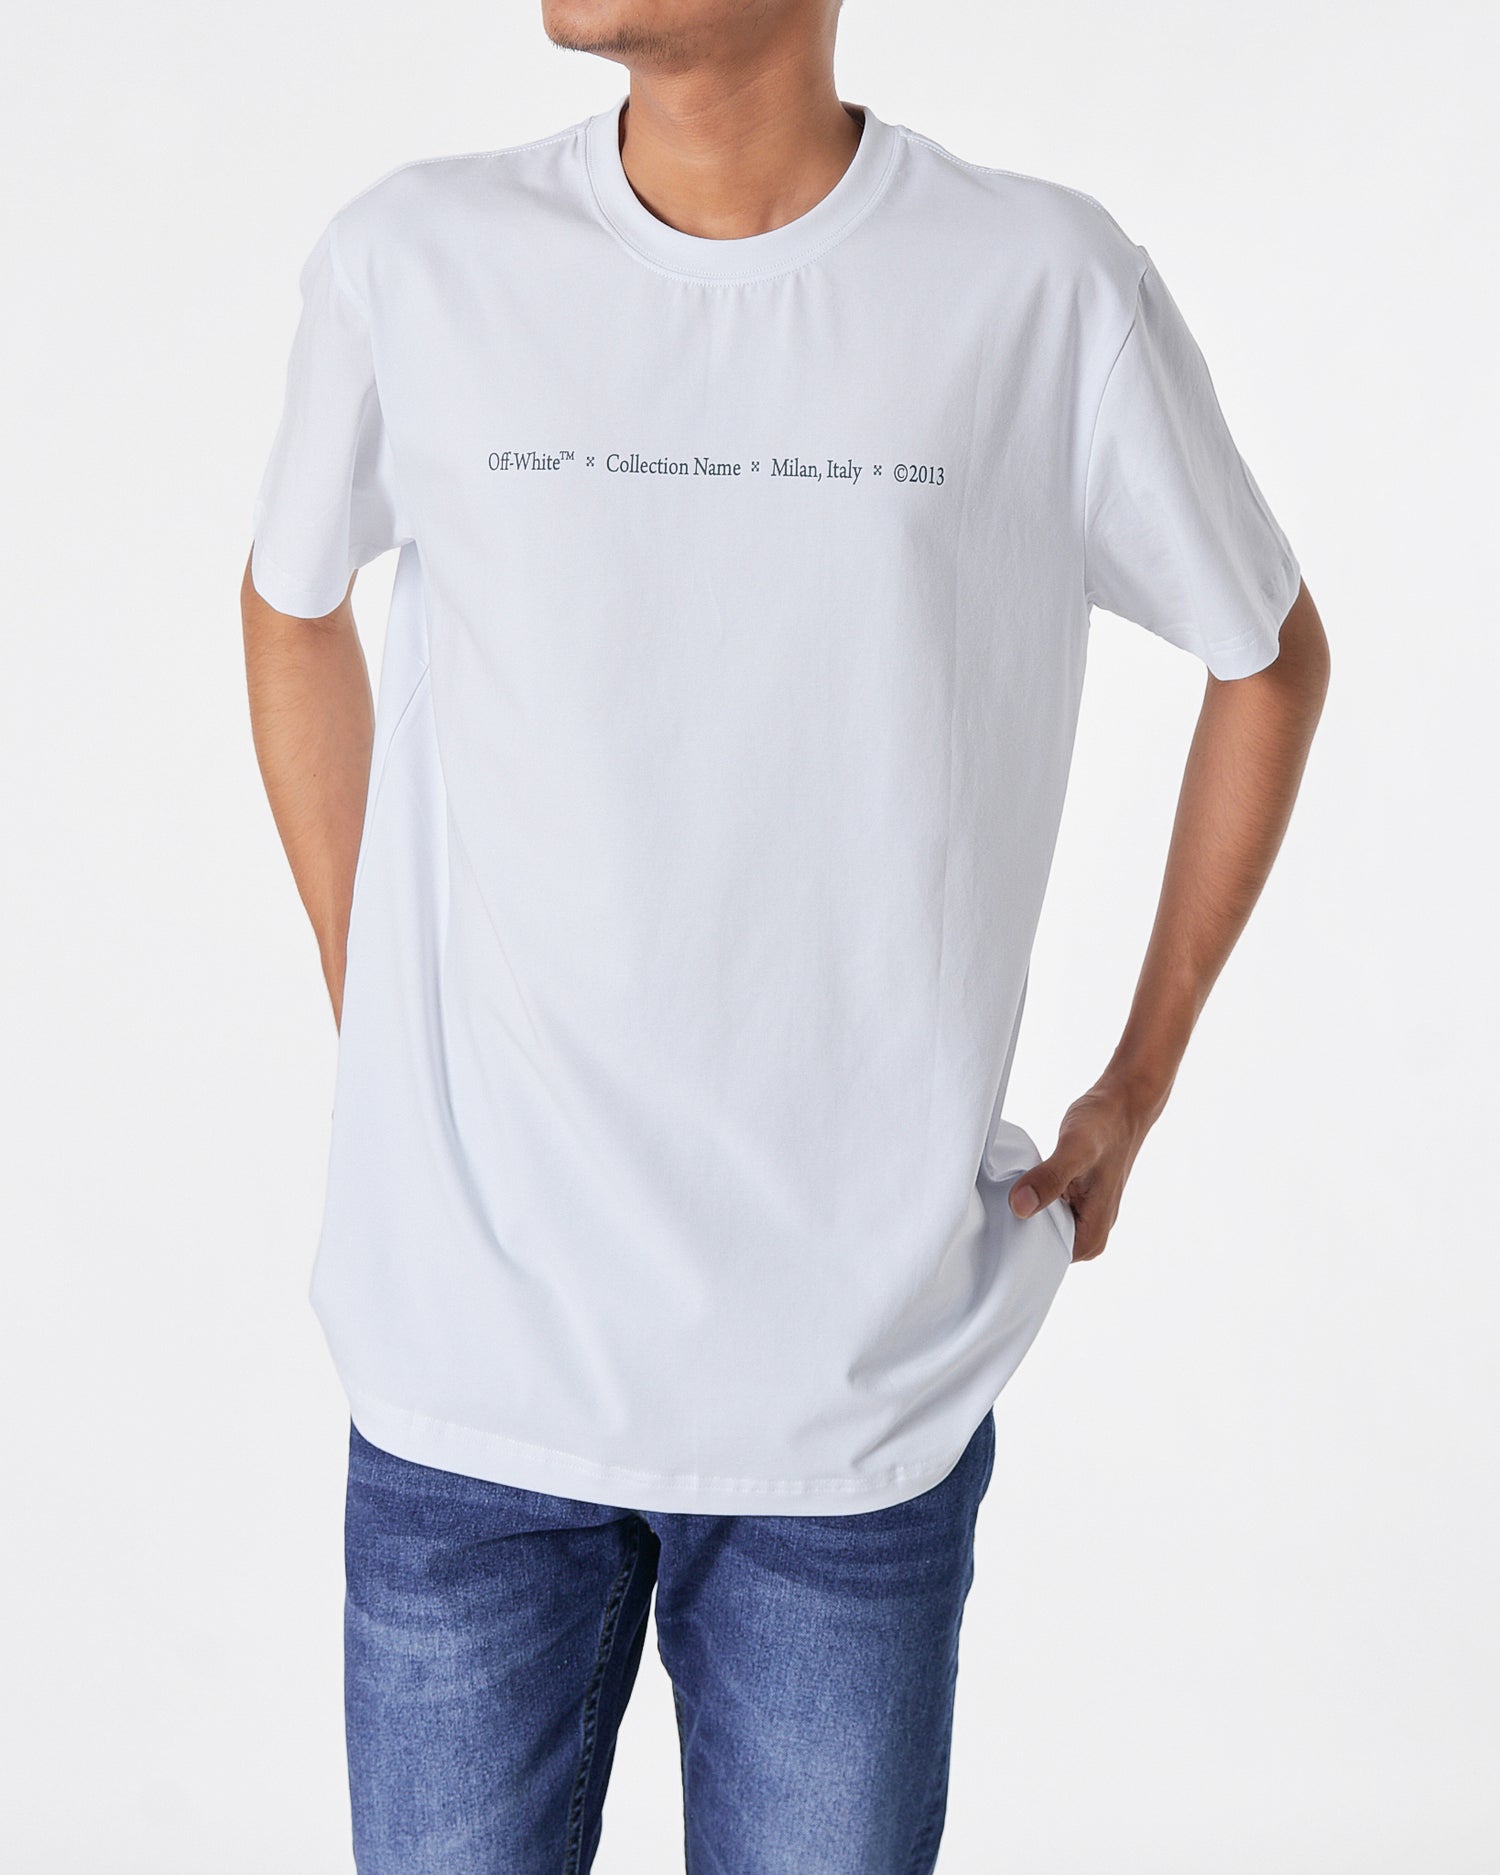 OW Cross Arrow Back Printed Men White T-Shirt 17.90